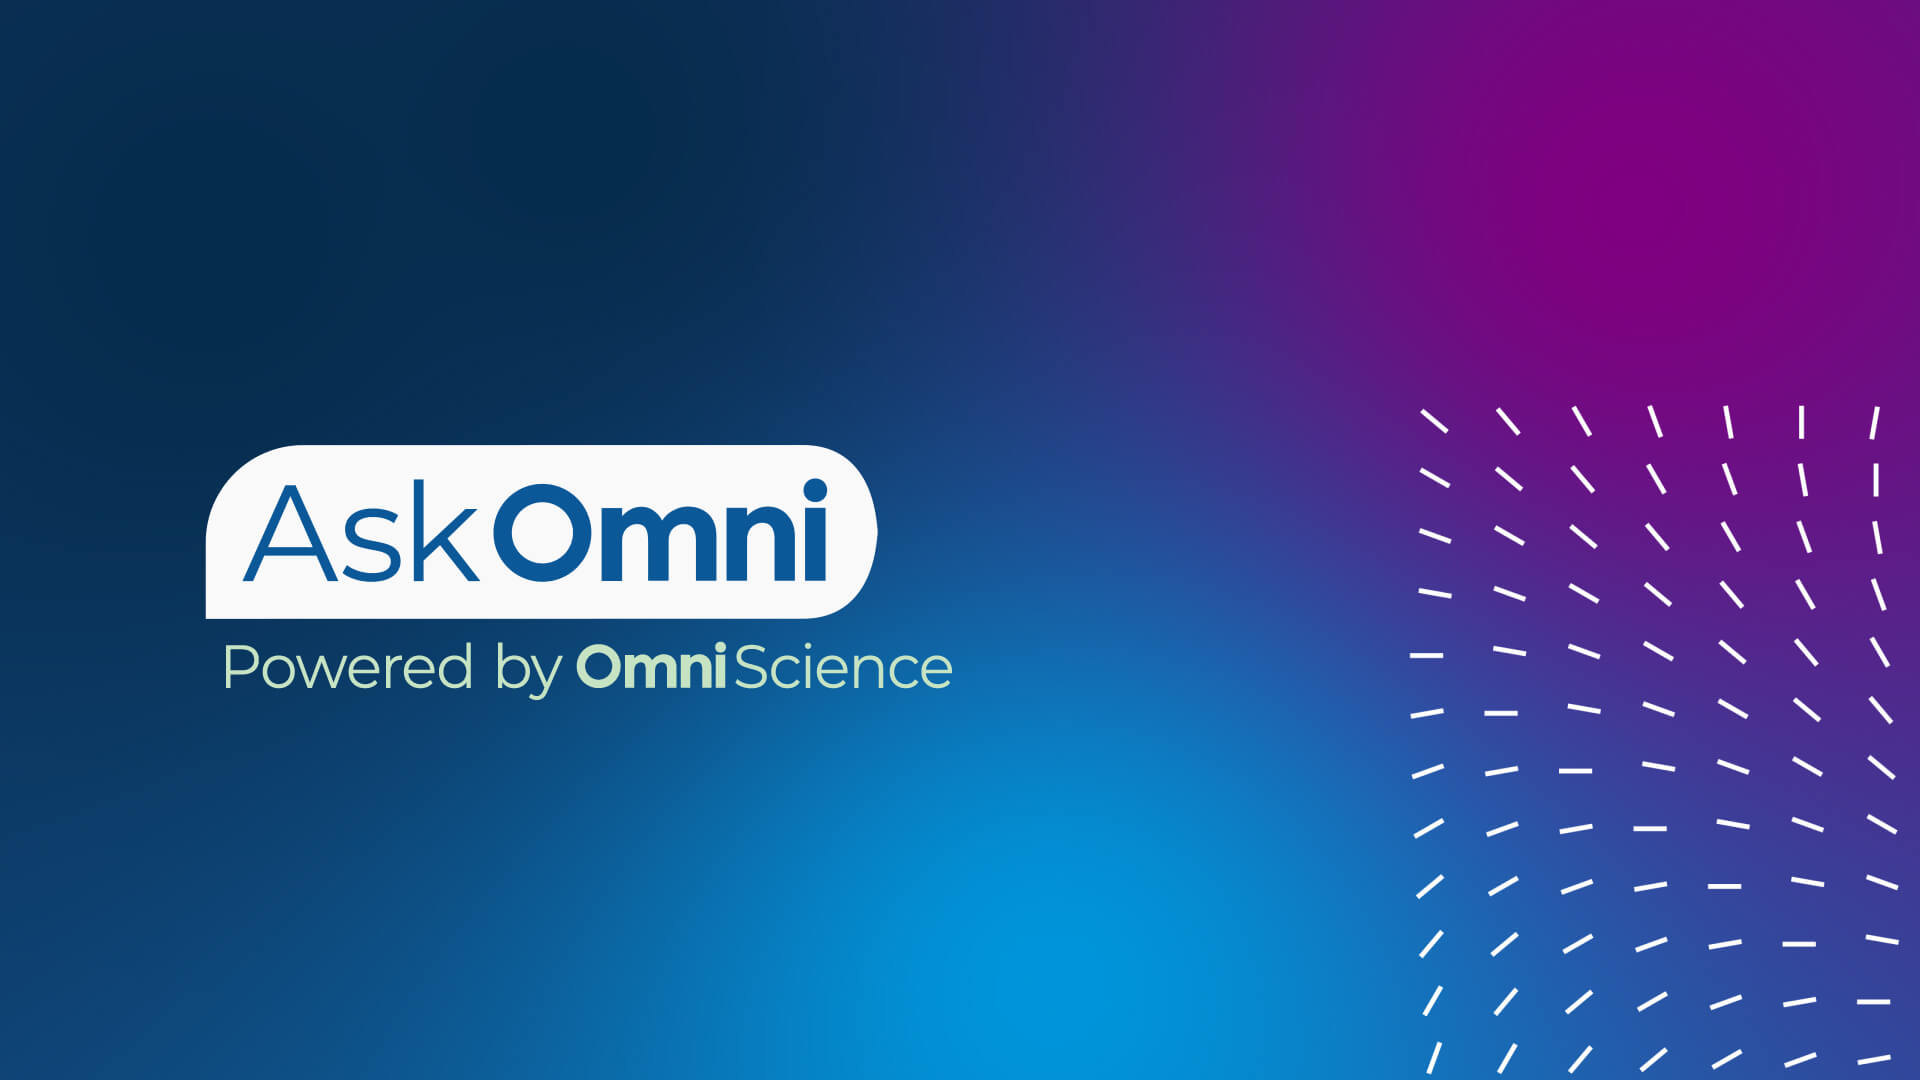 AskOmni, powered by OmniScience